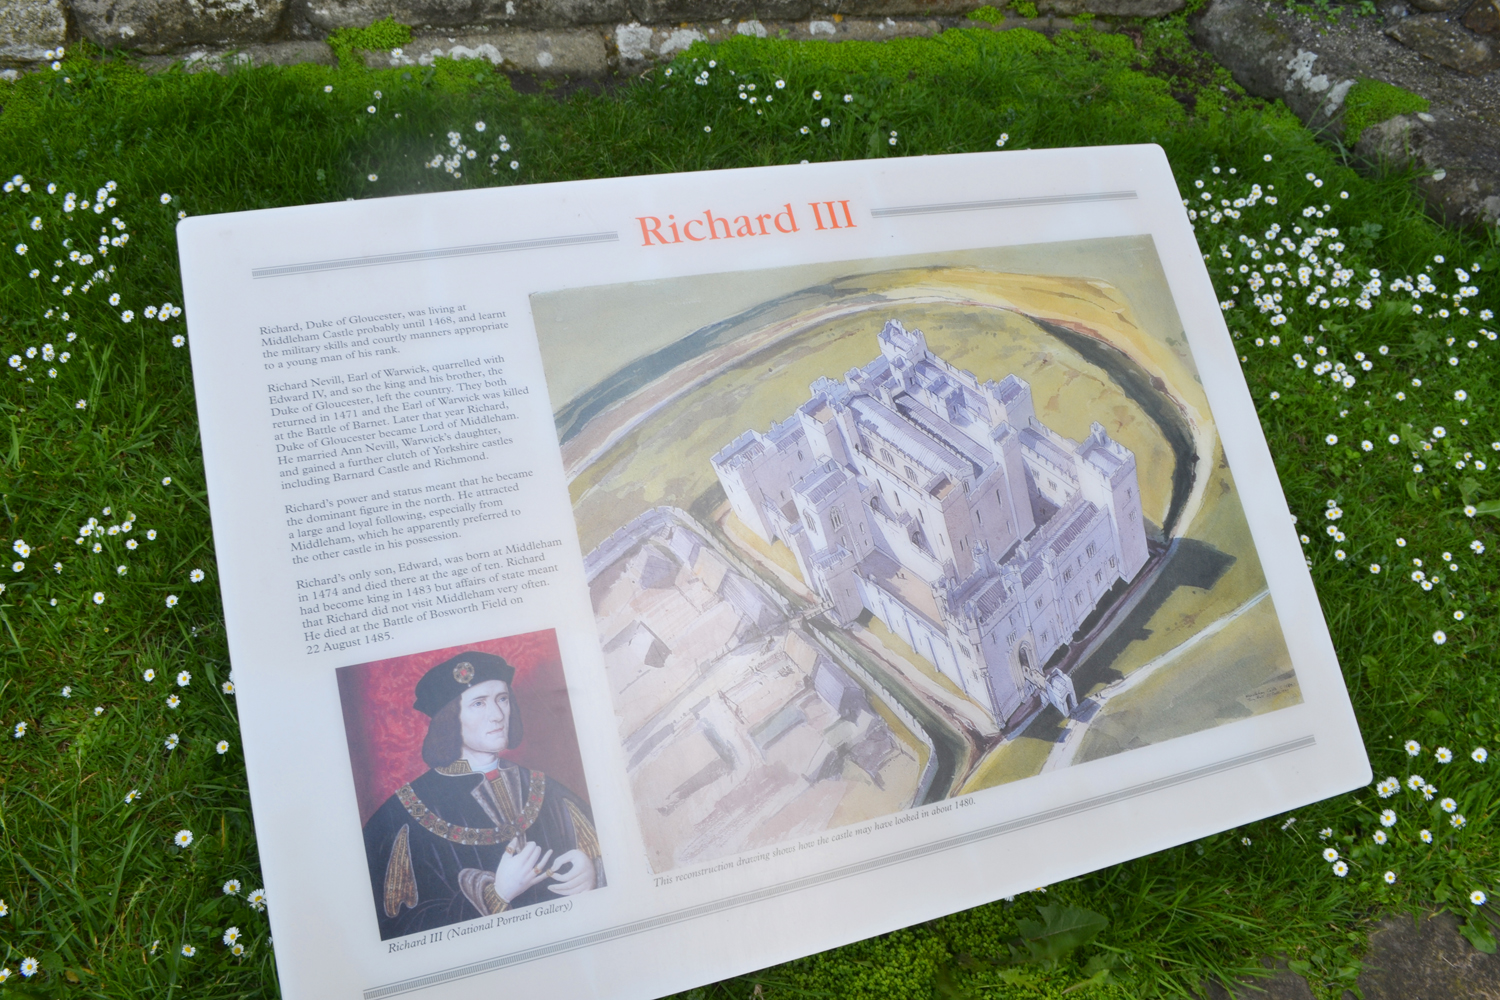 Richard III information